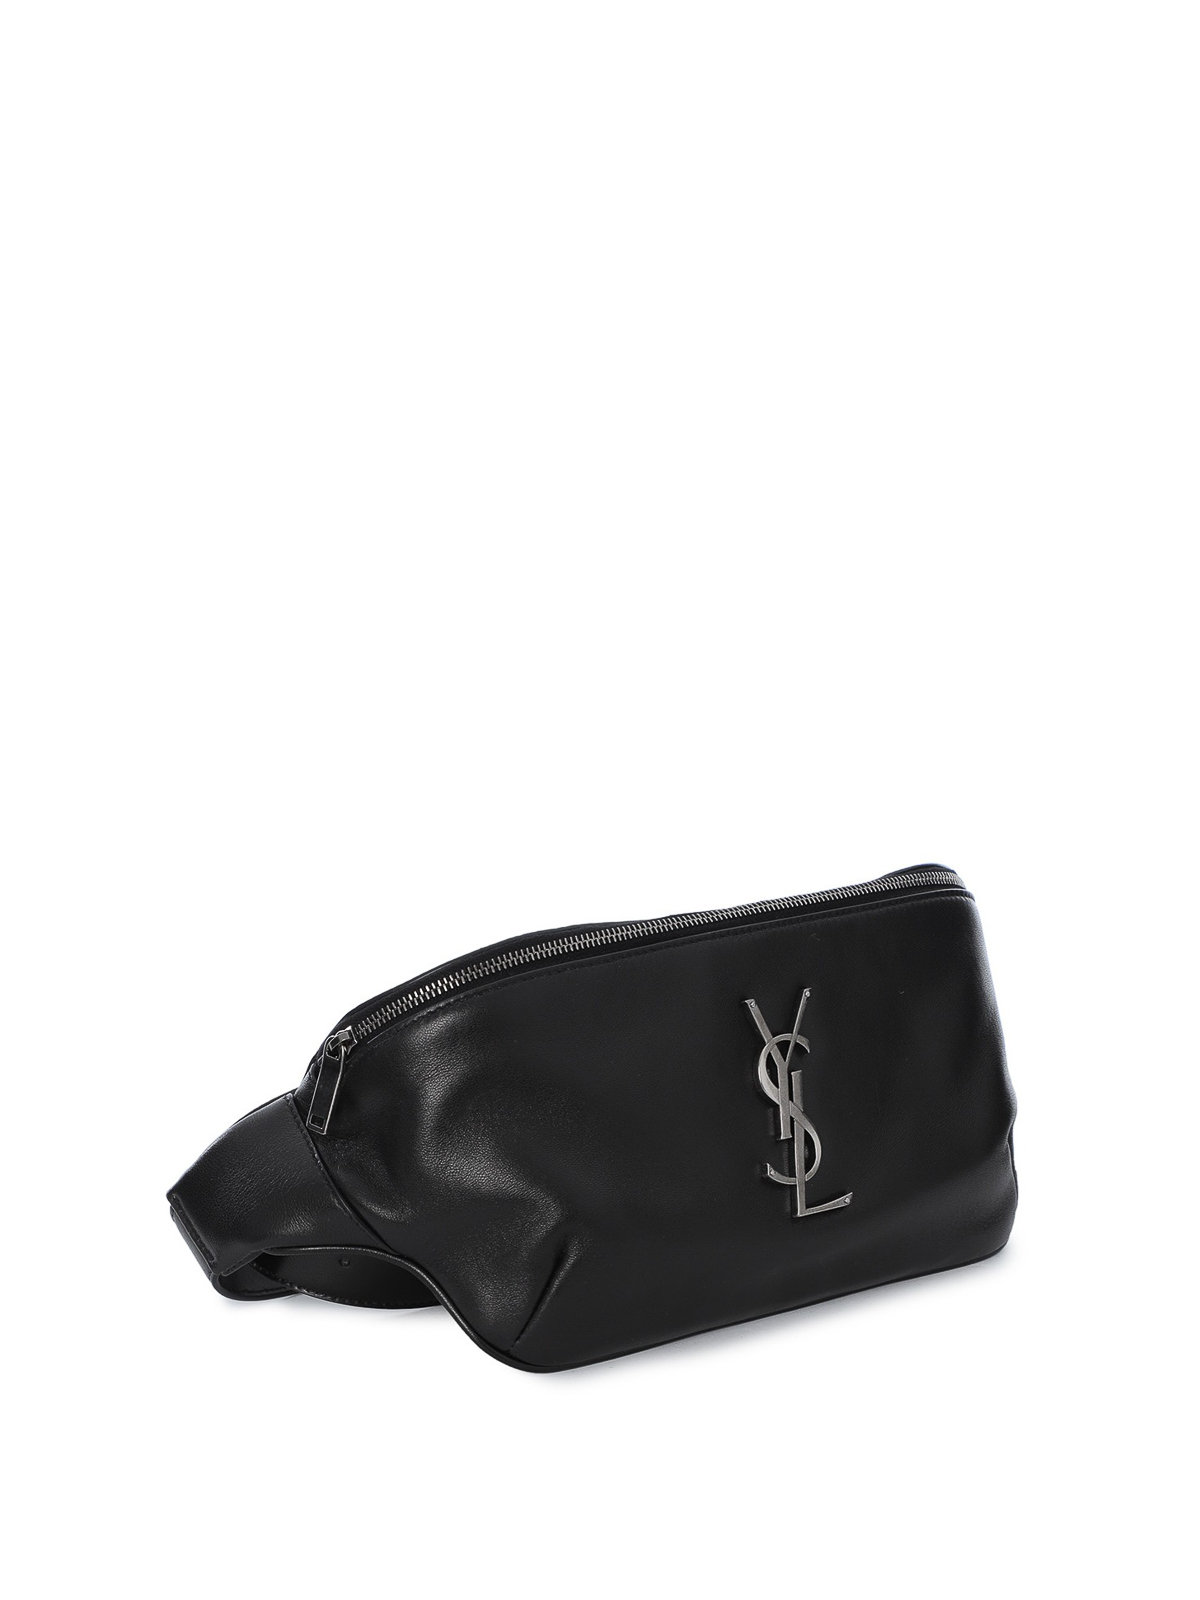 Saint Laurent YSL Monogram Logo Fanny Pack/Belt Bag